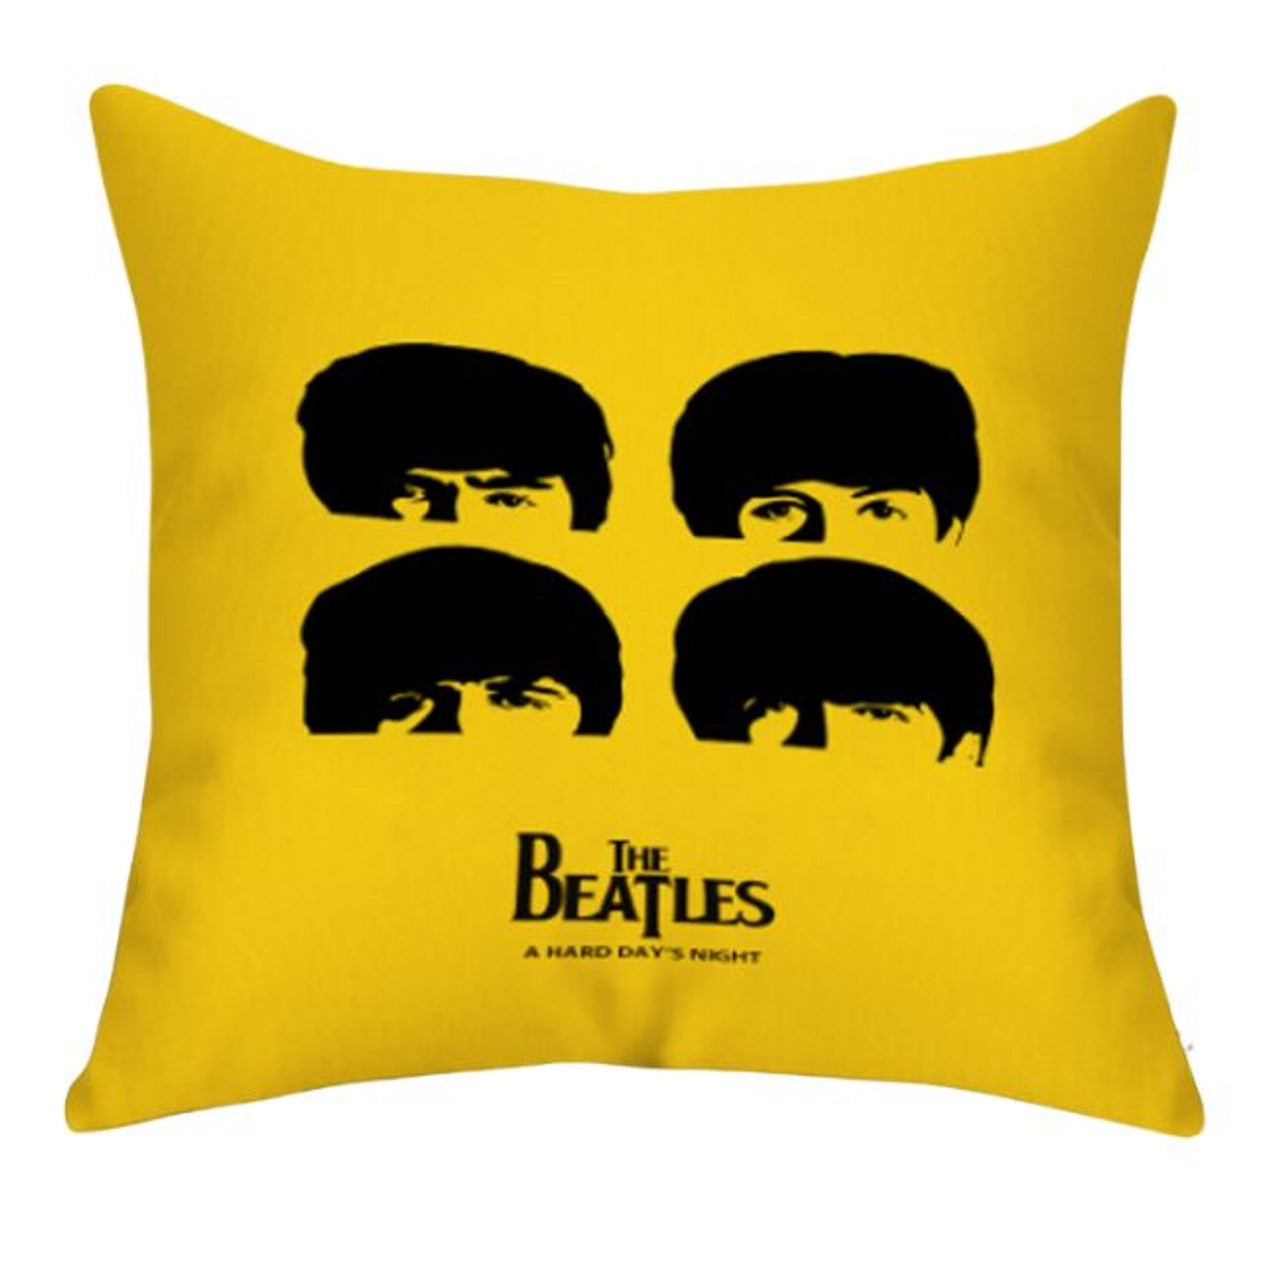 The Beatles - Yellow Hard Days Night Cushion Throw Pillow